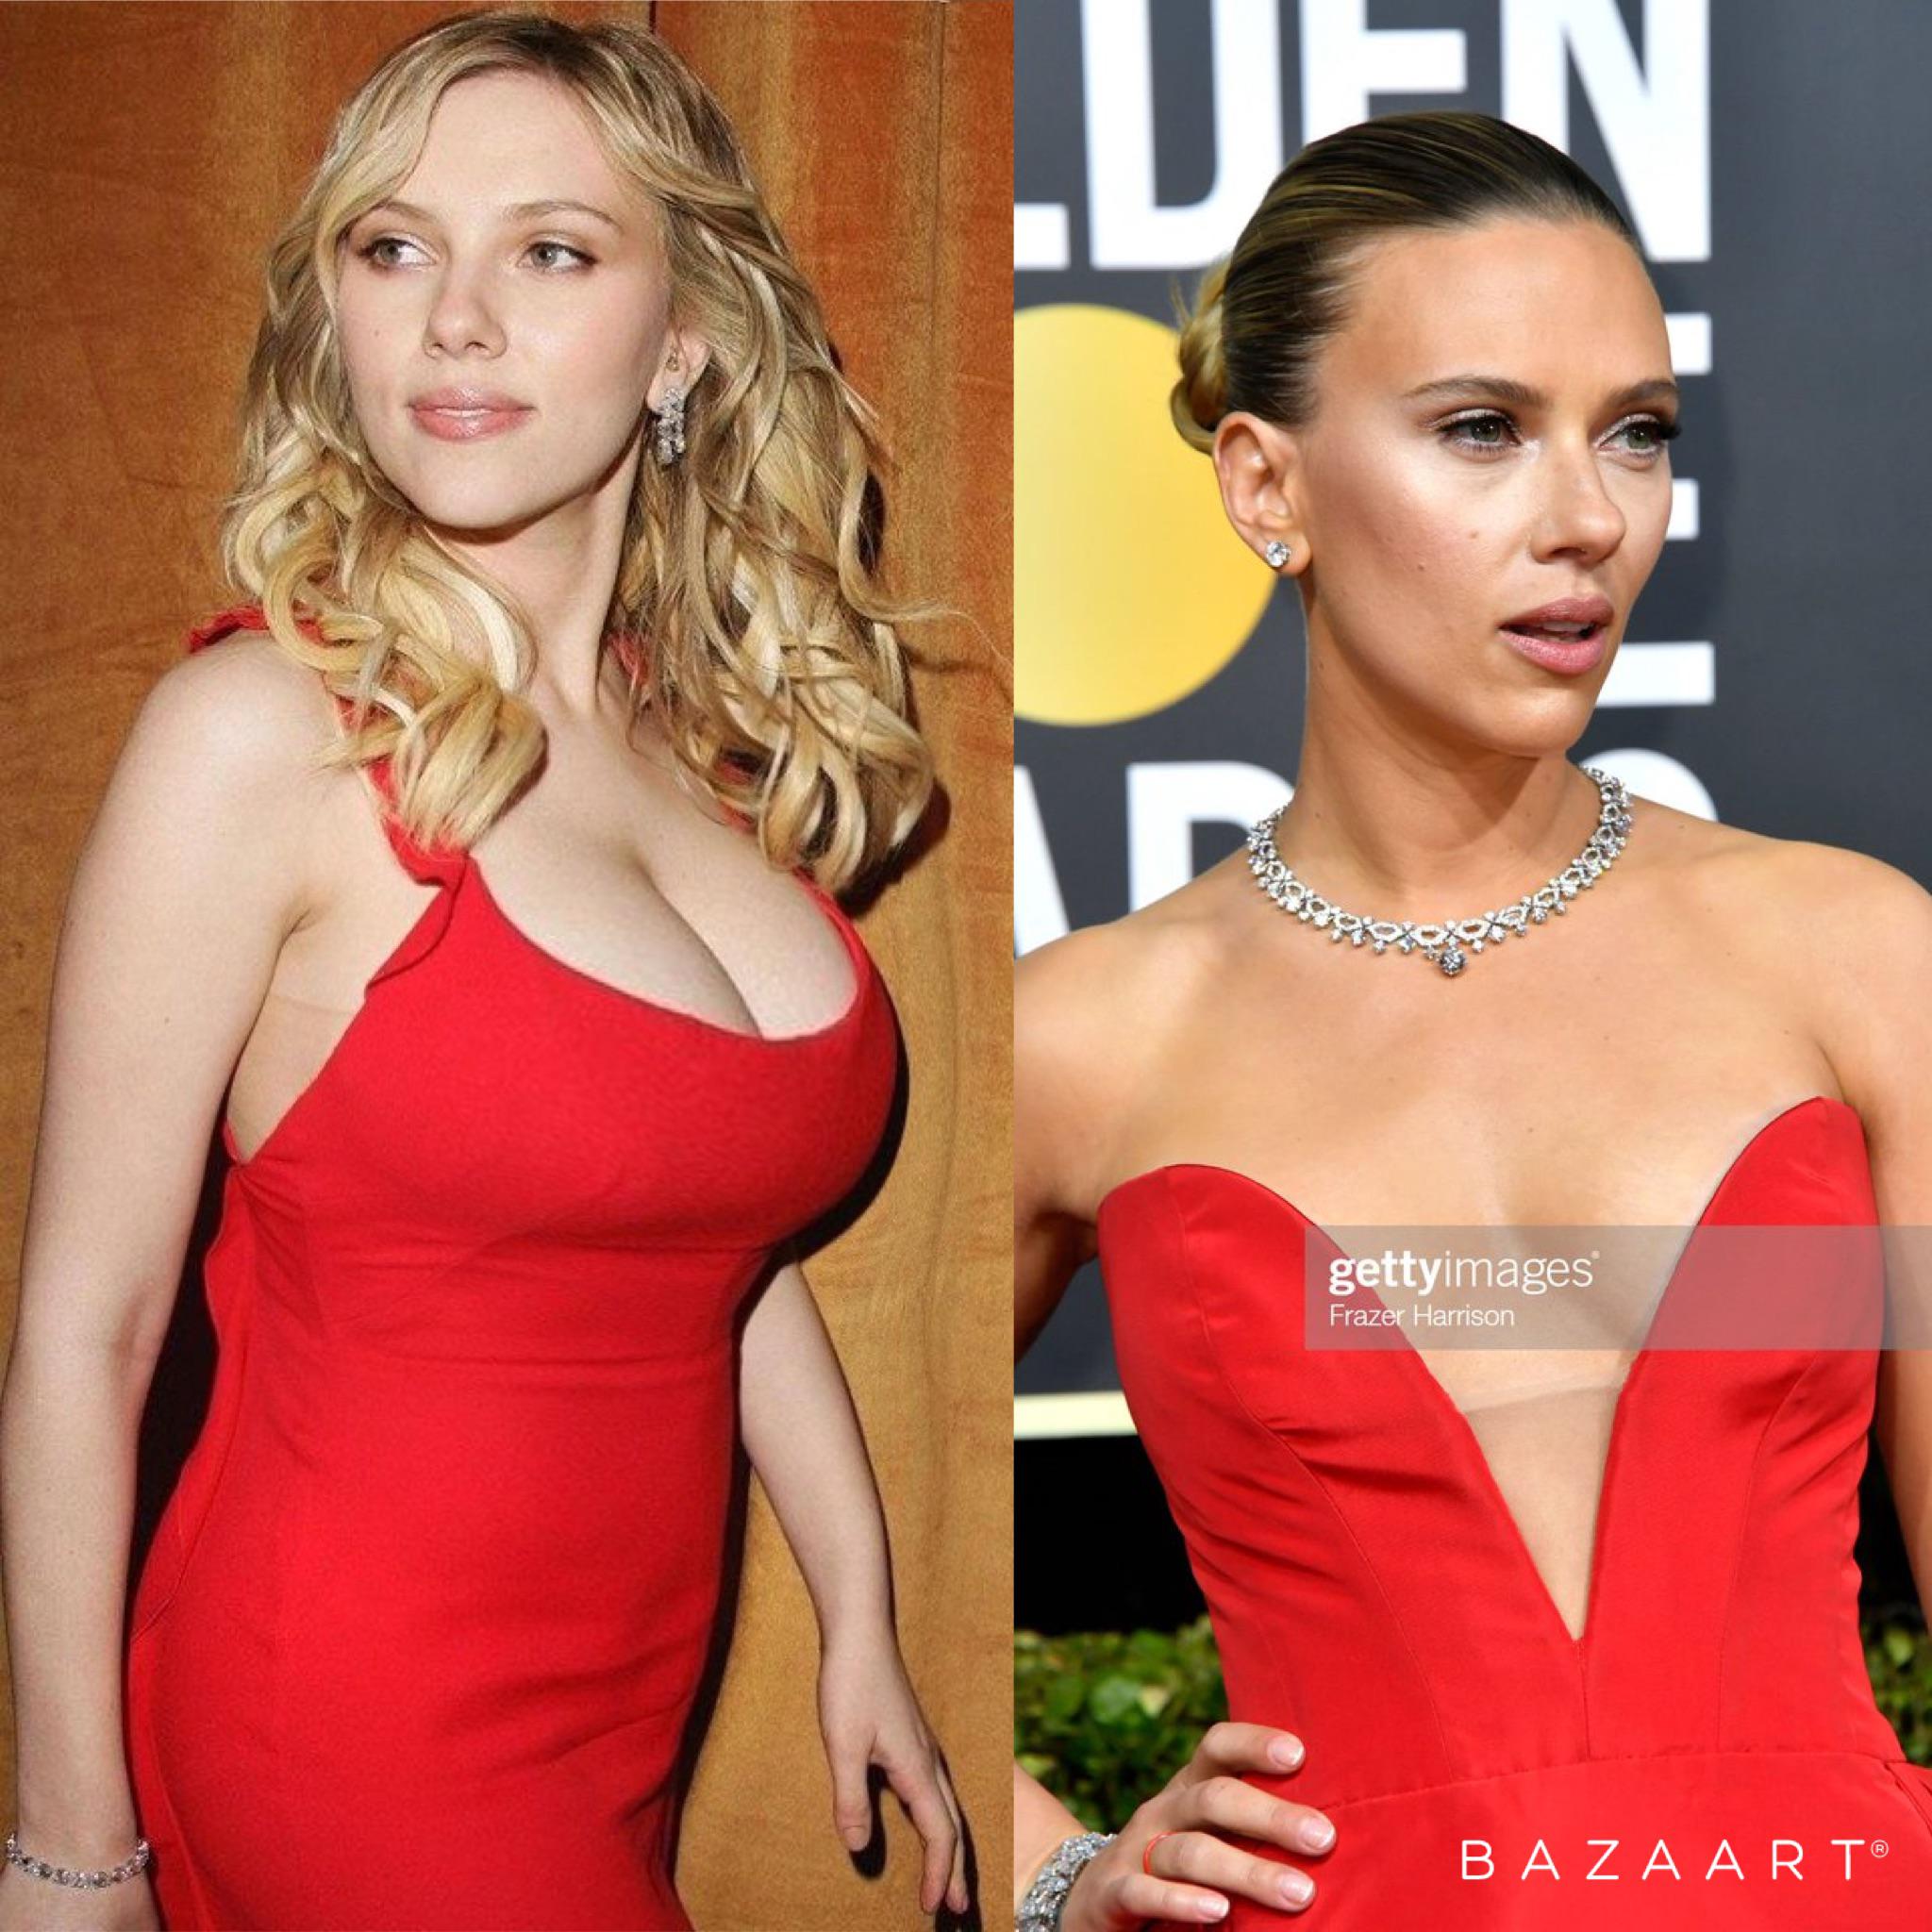 Scarlett Johansson - Do you guys prefer bigger or skinny? 88